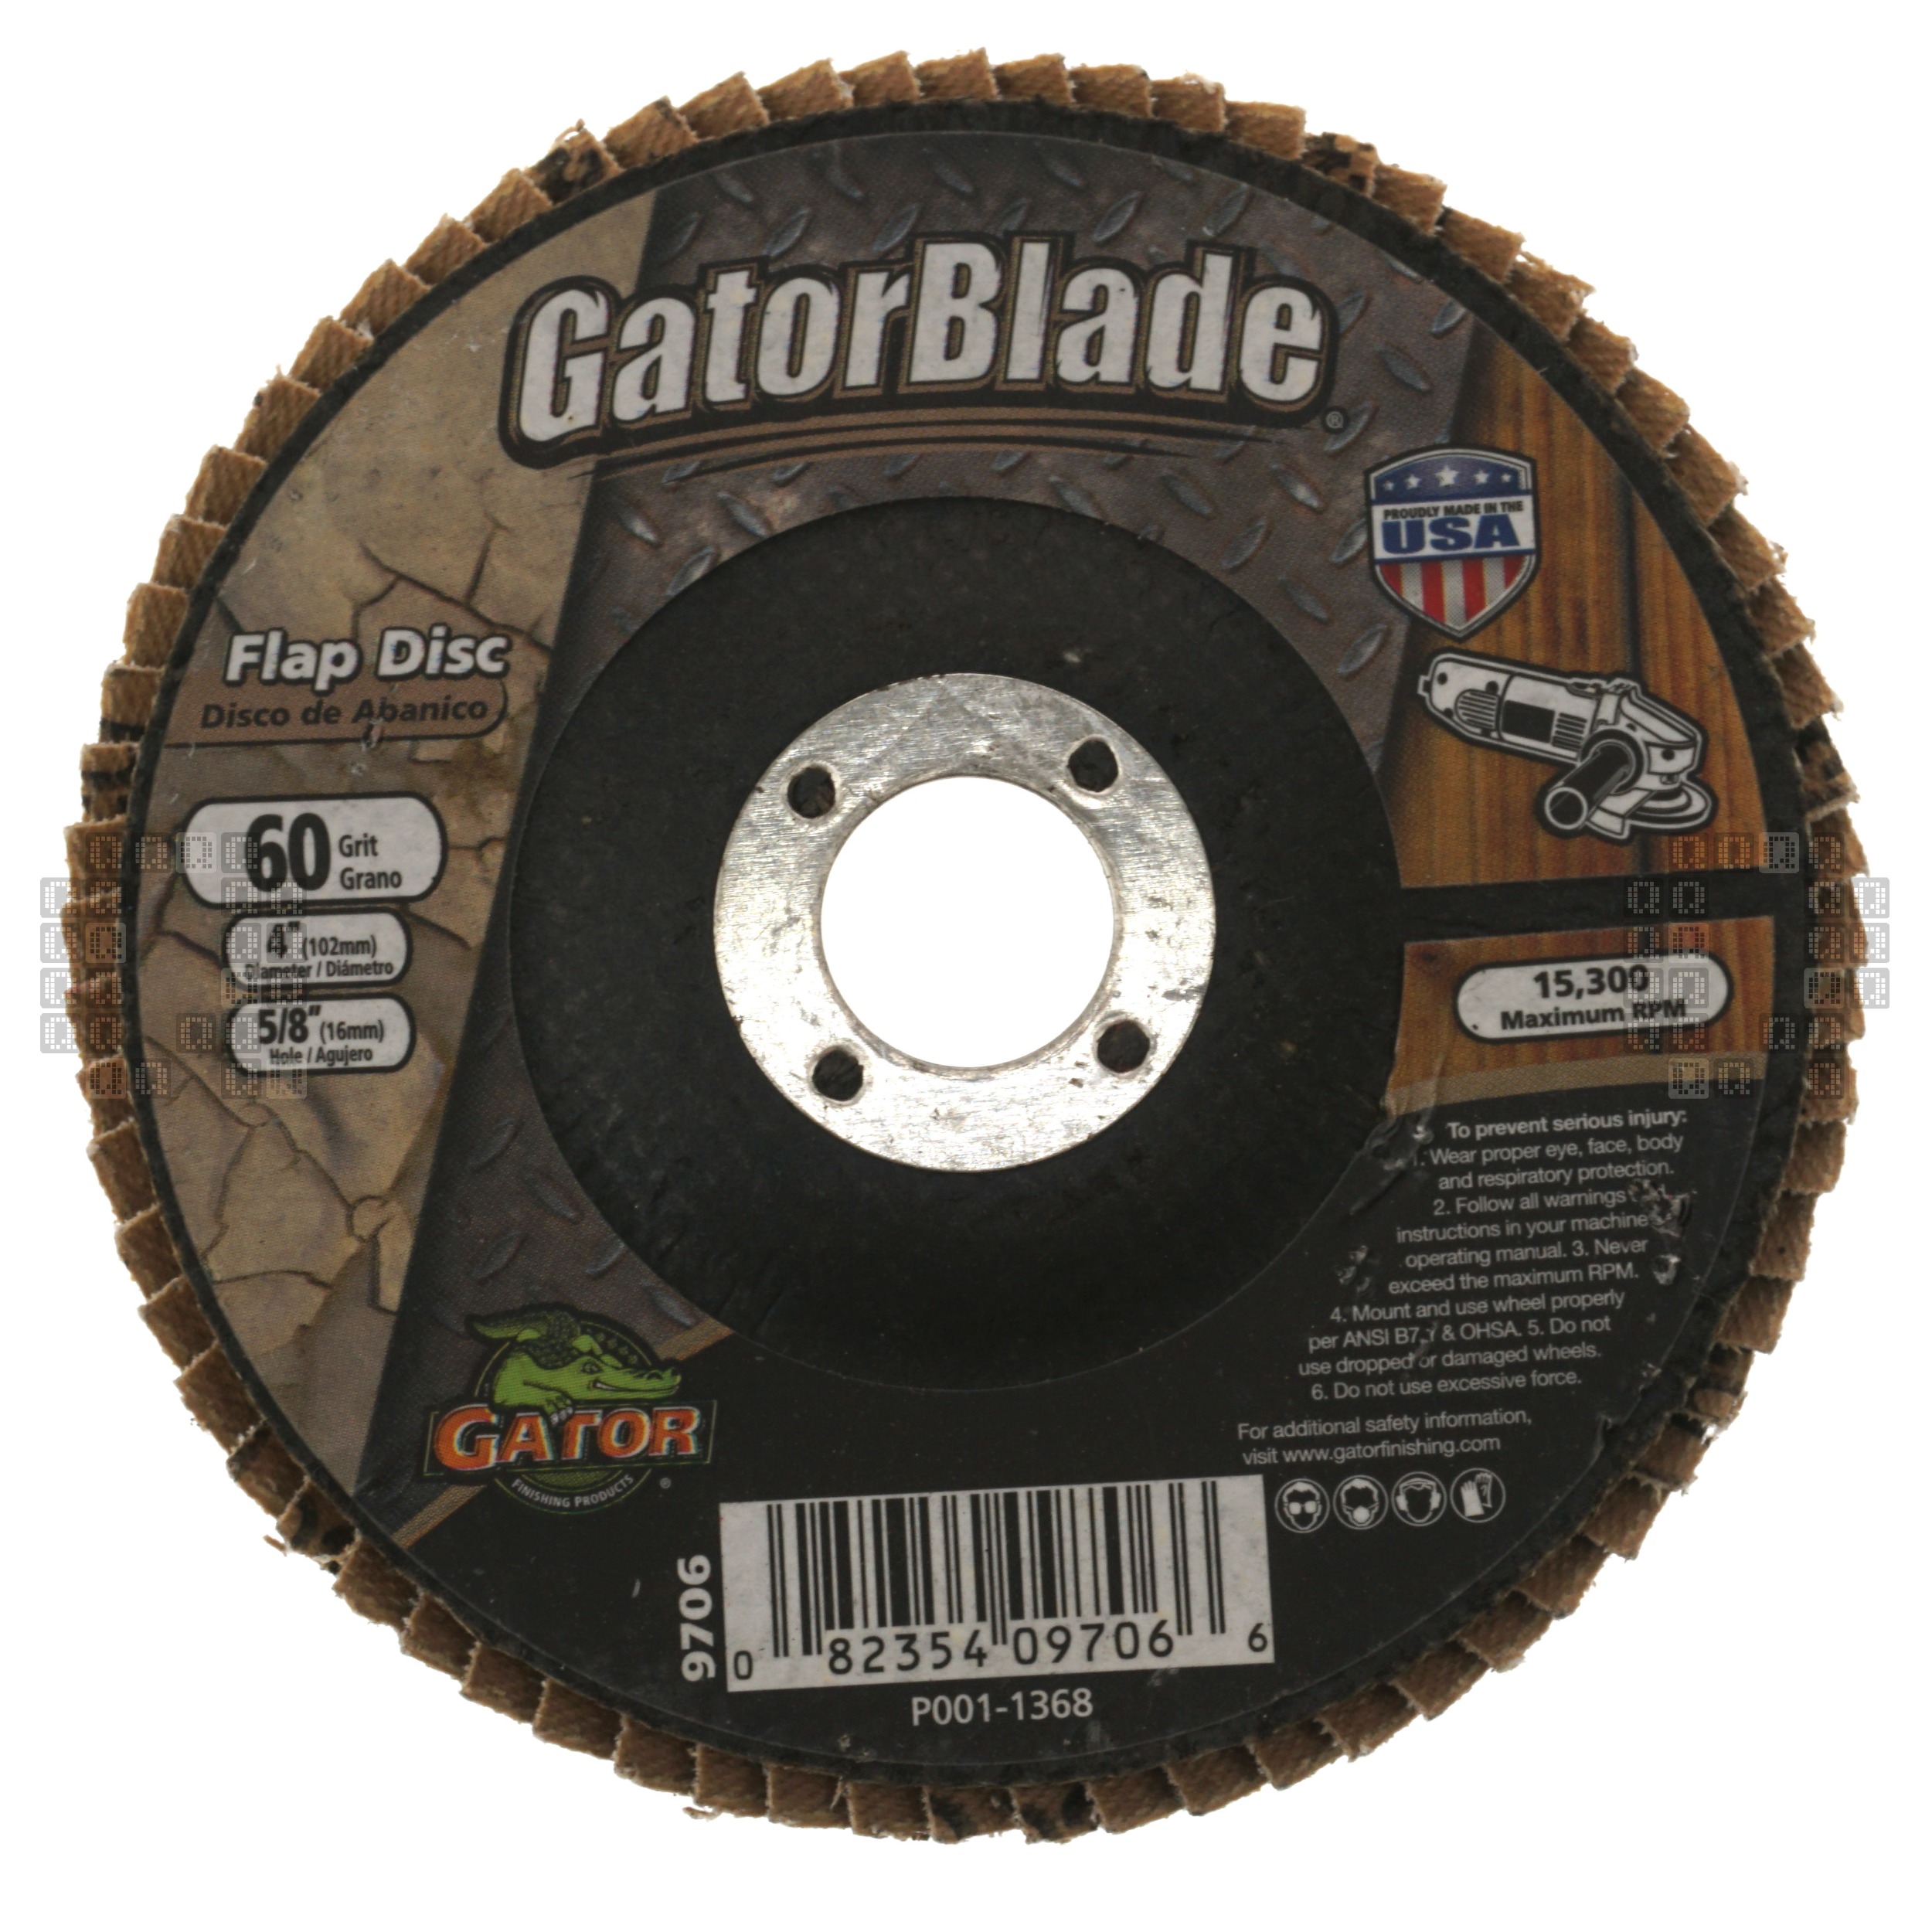 Gator 9706 4" Zirconium Oxide Abrasive Flap Disc, 5/8" Arbor, 60 Grit